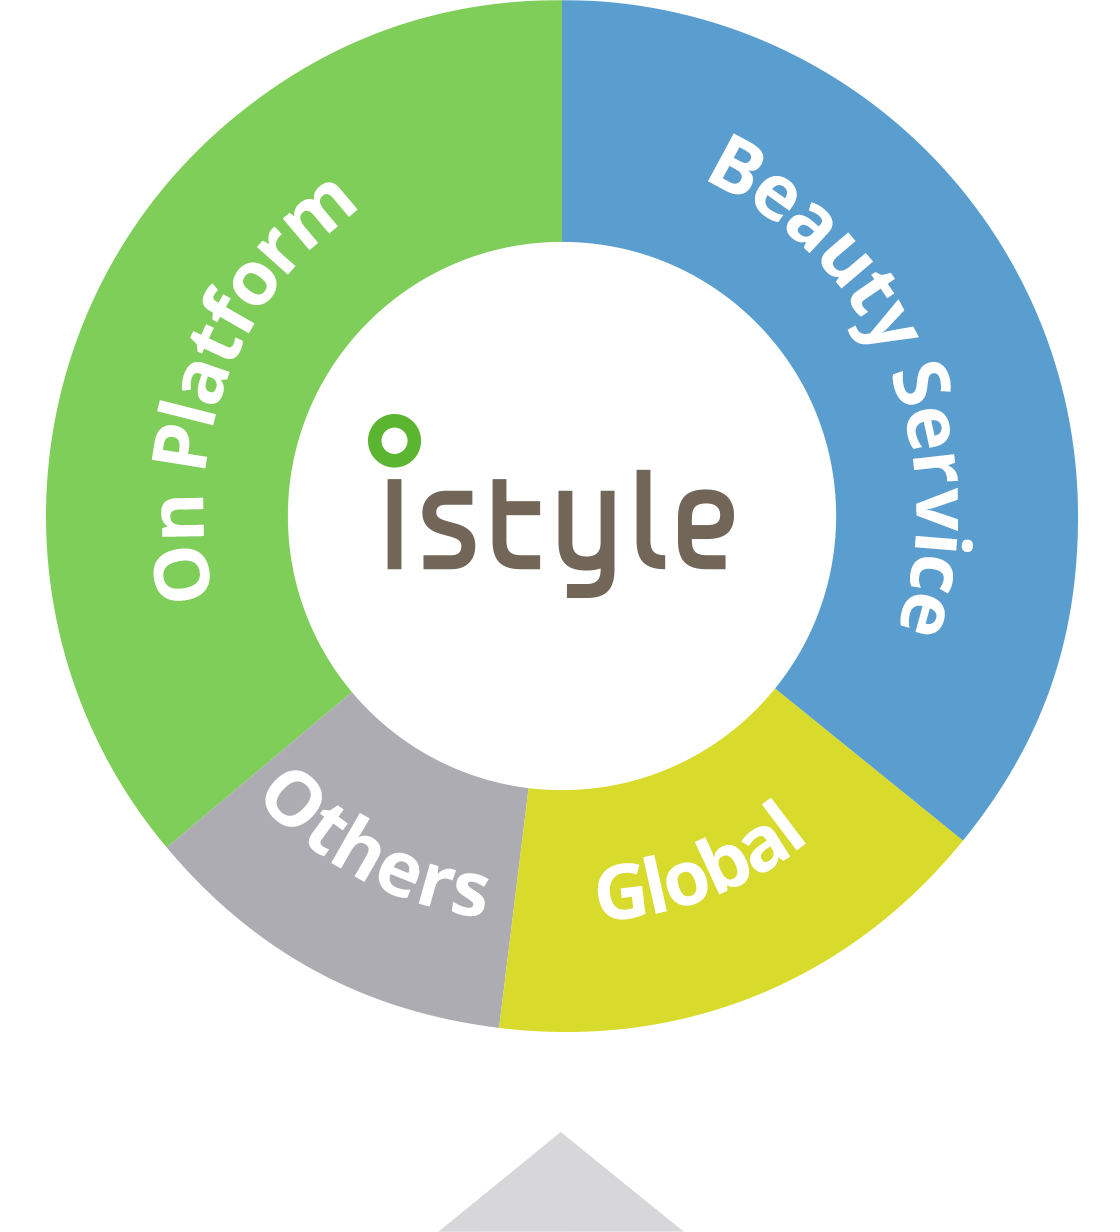 istyle = On Platform,Beauty Service,Global,Others